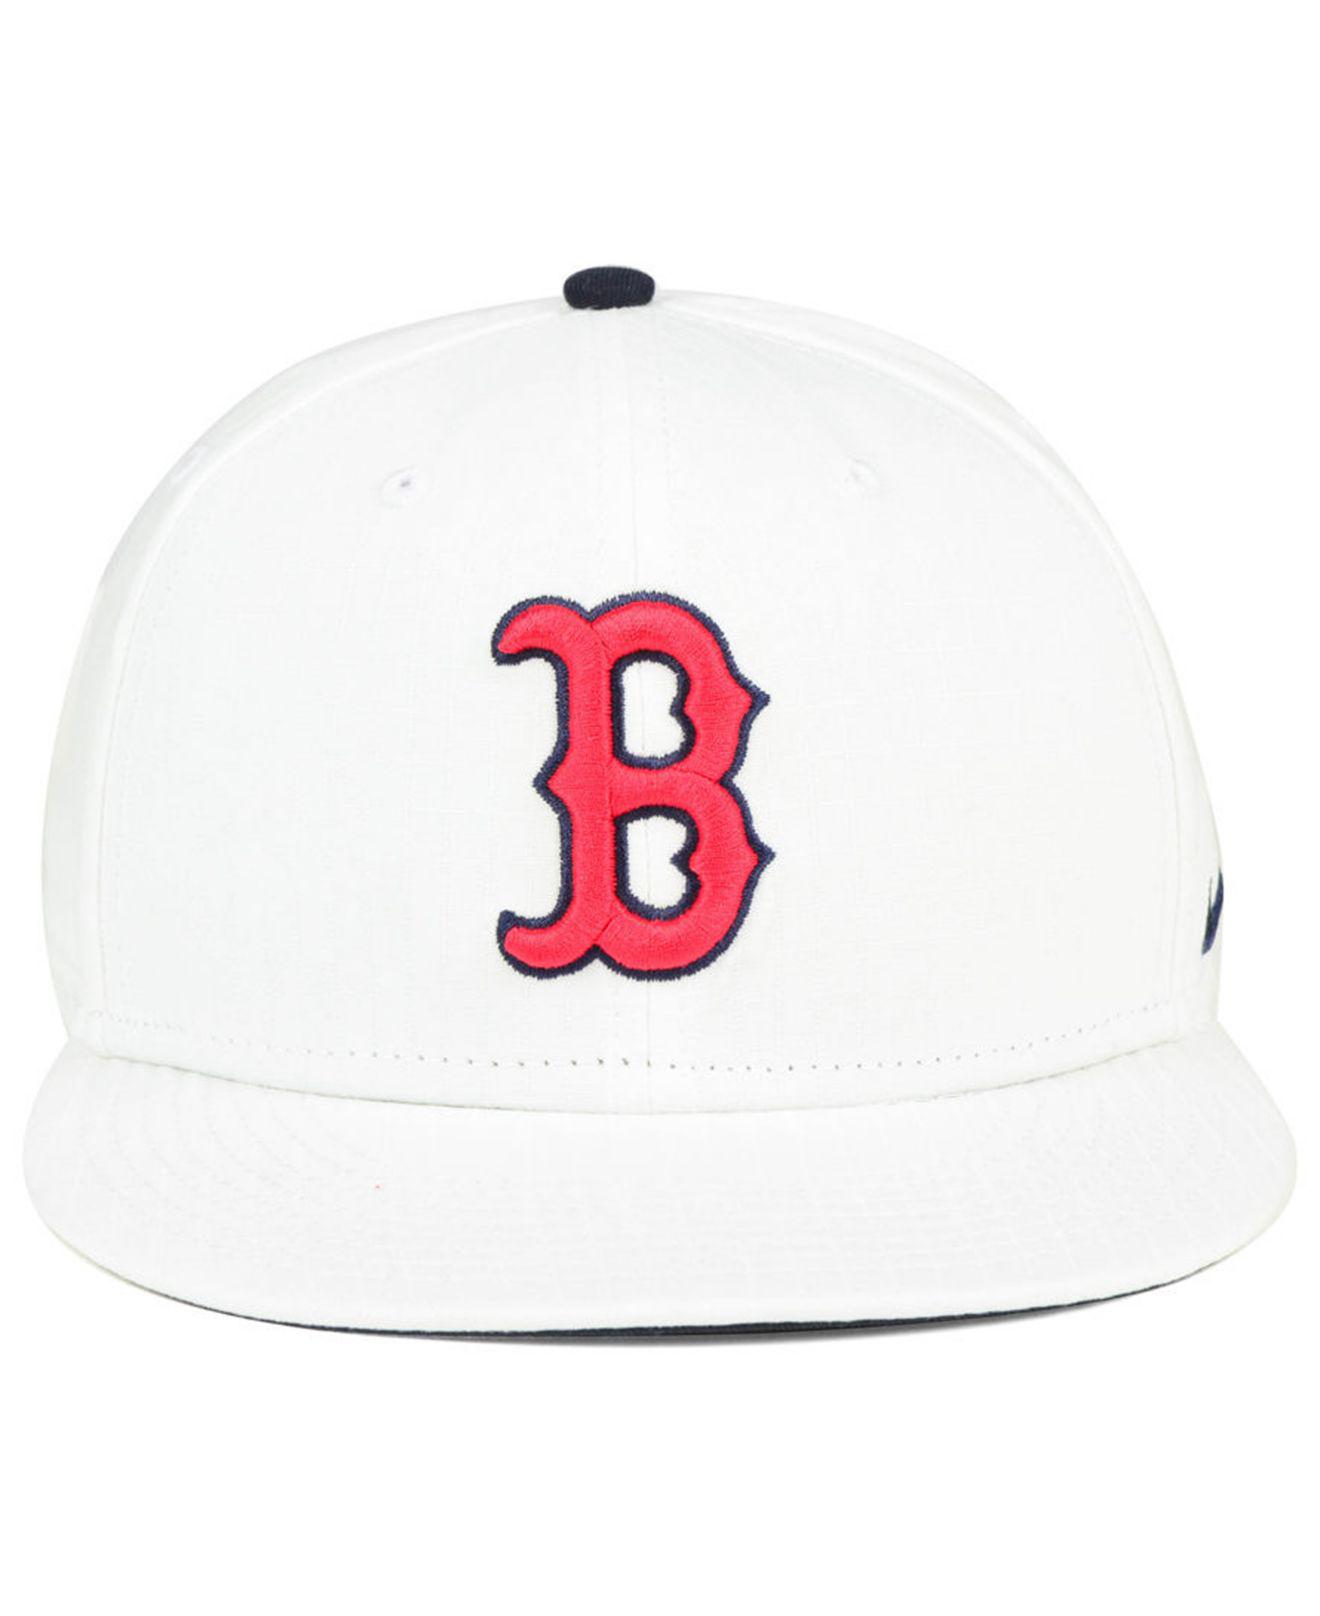 Nike Boston Red Sox White Ripstop Snapback Cap for Men